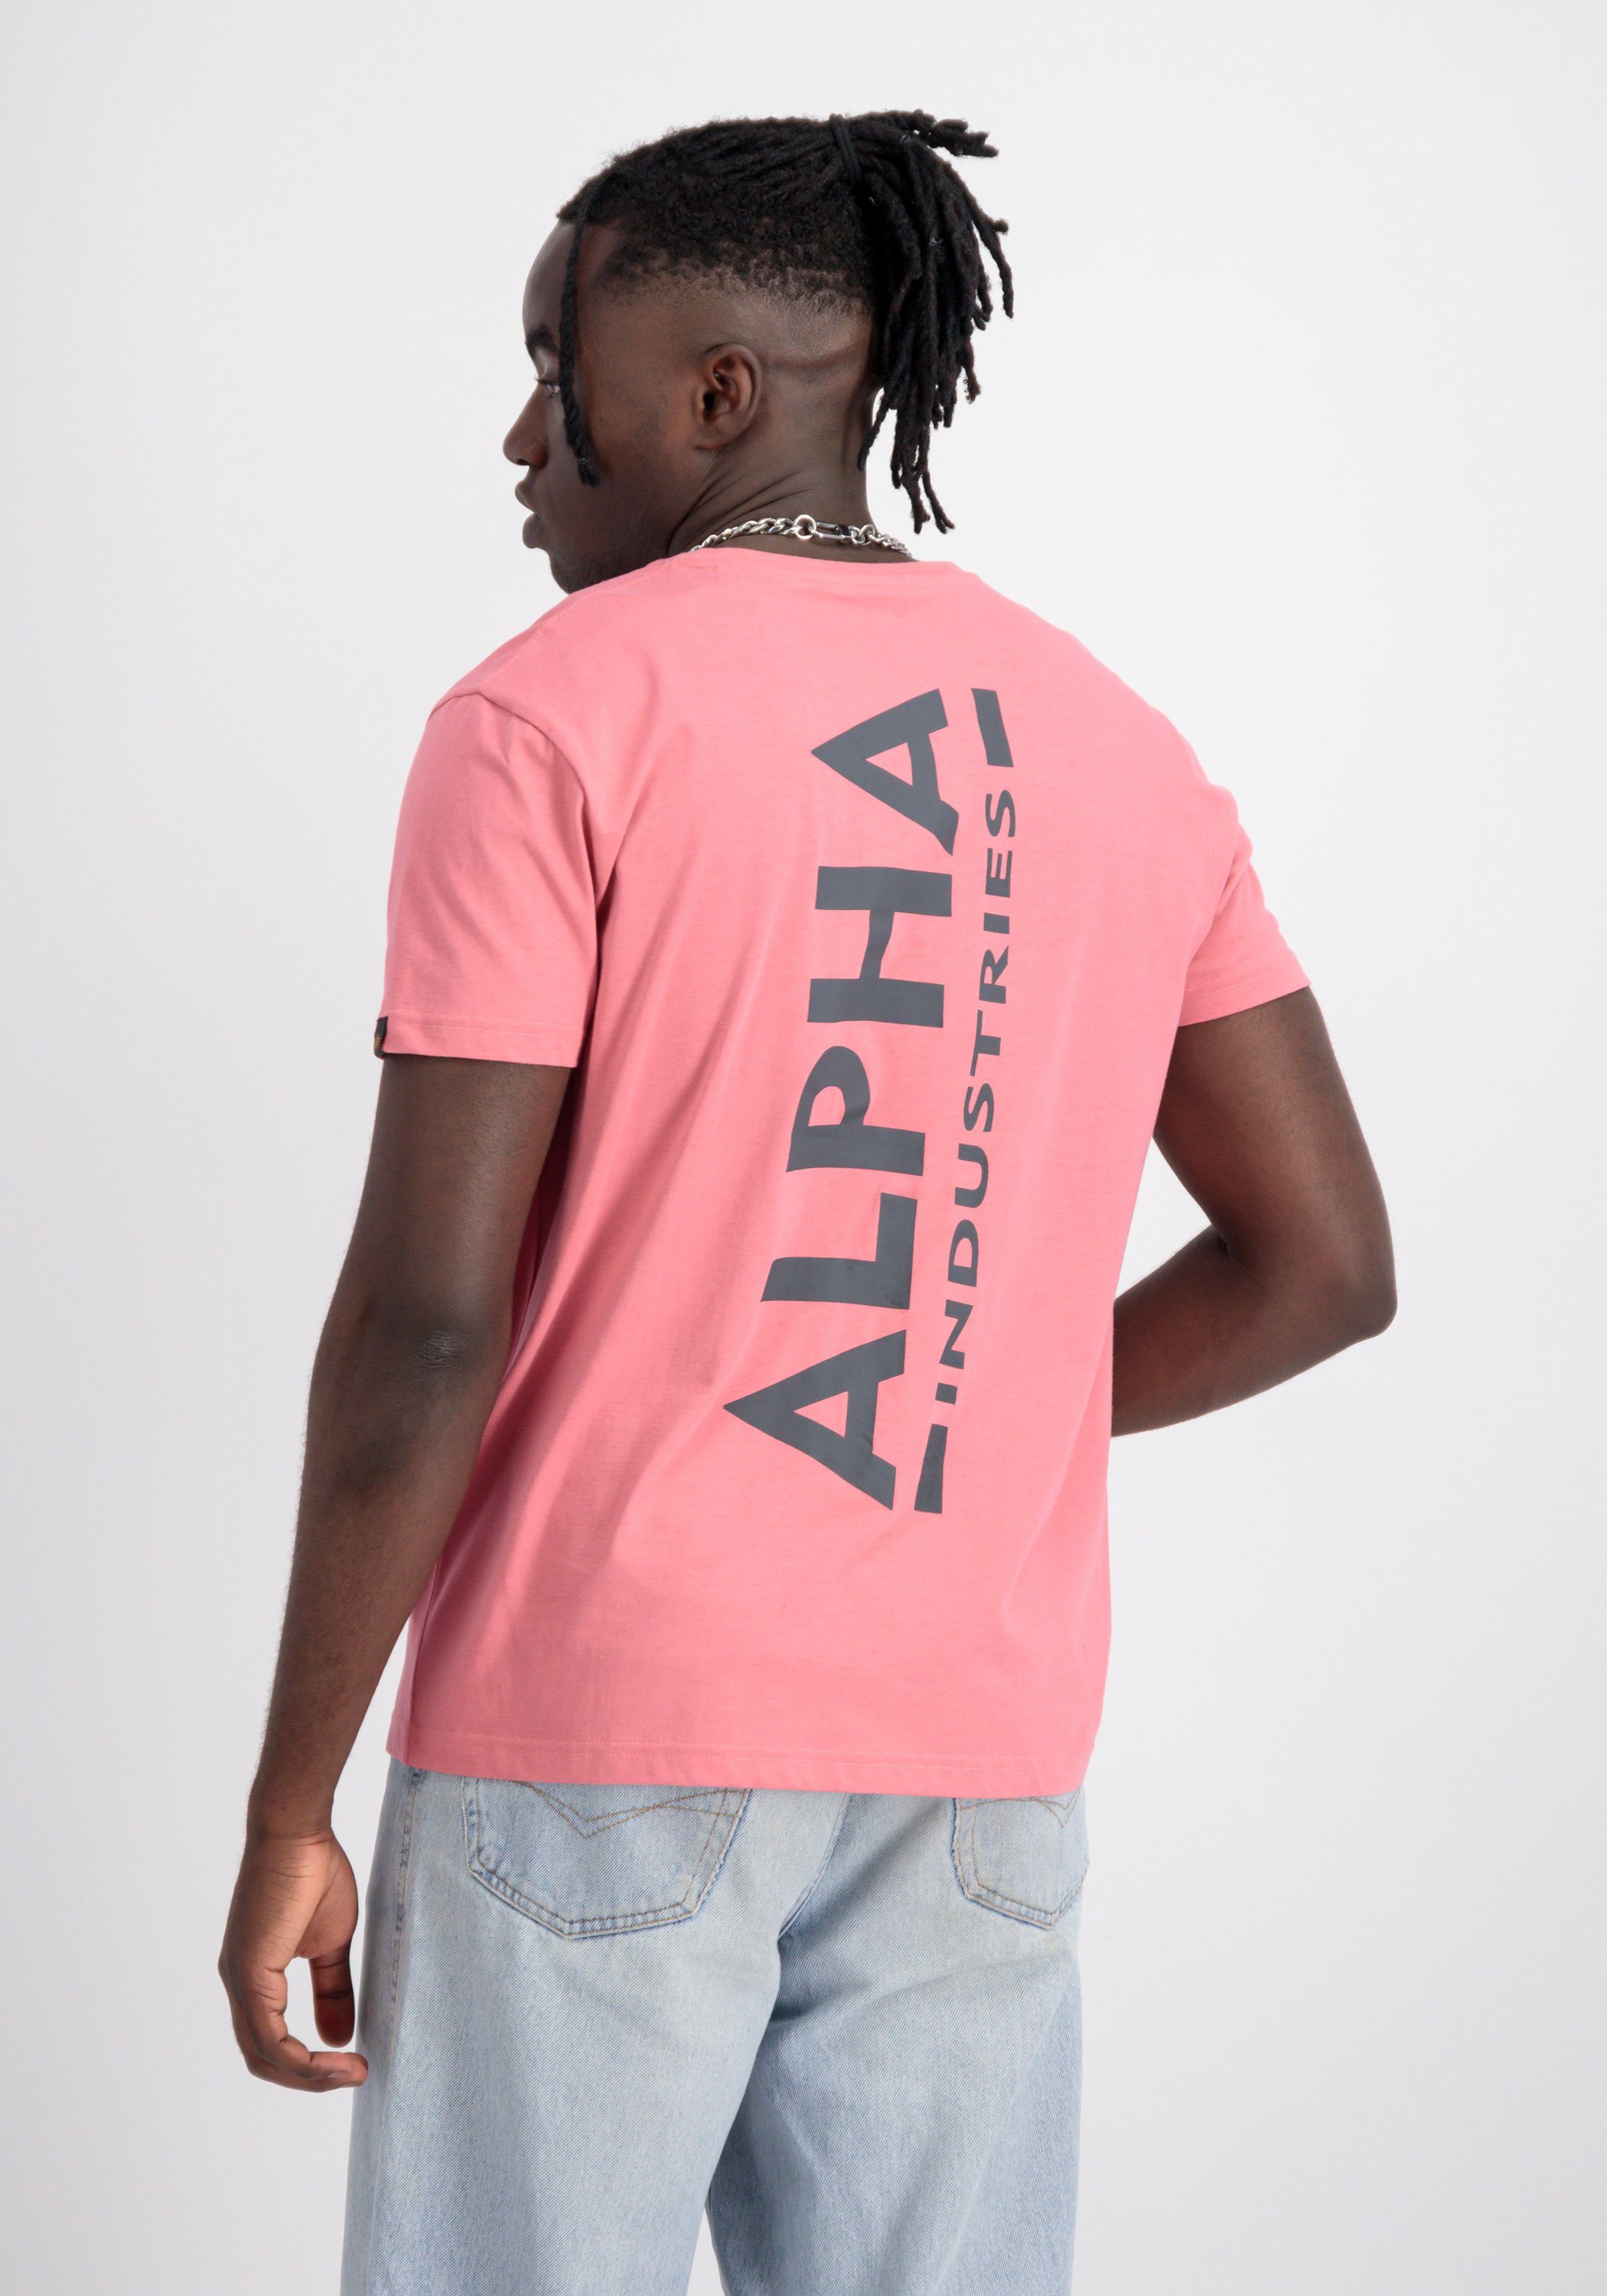 Alpha Industries T-Shirt Alpha Industries red - T-Shirts coral Backprint T Men